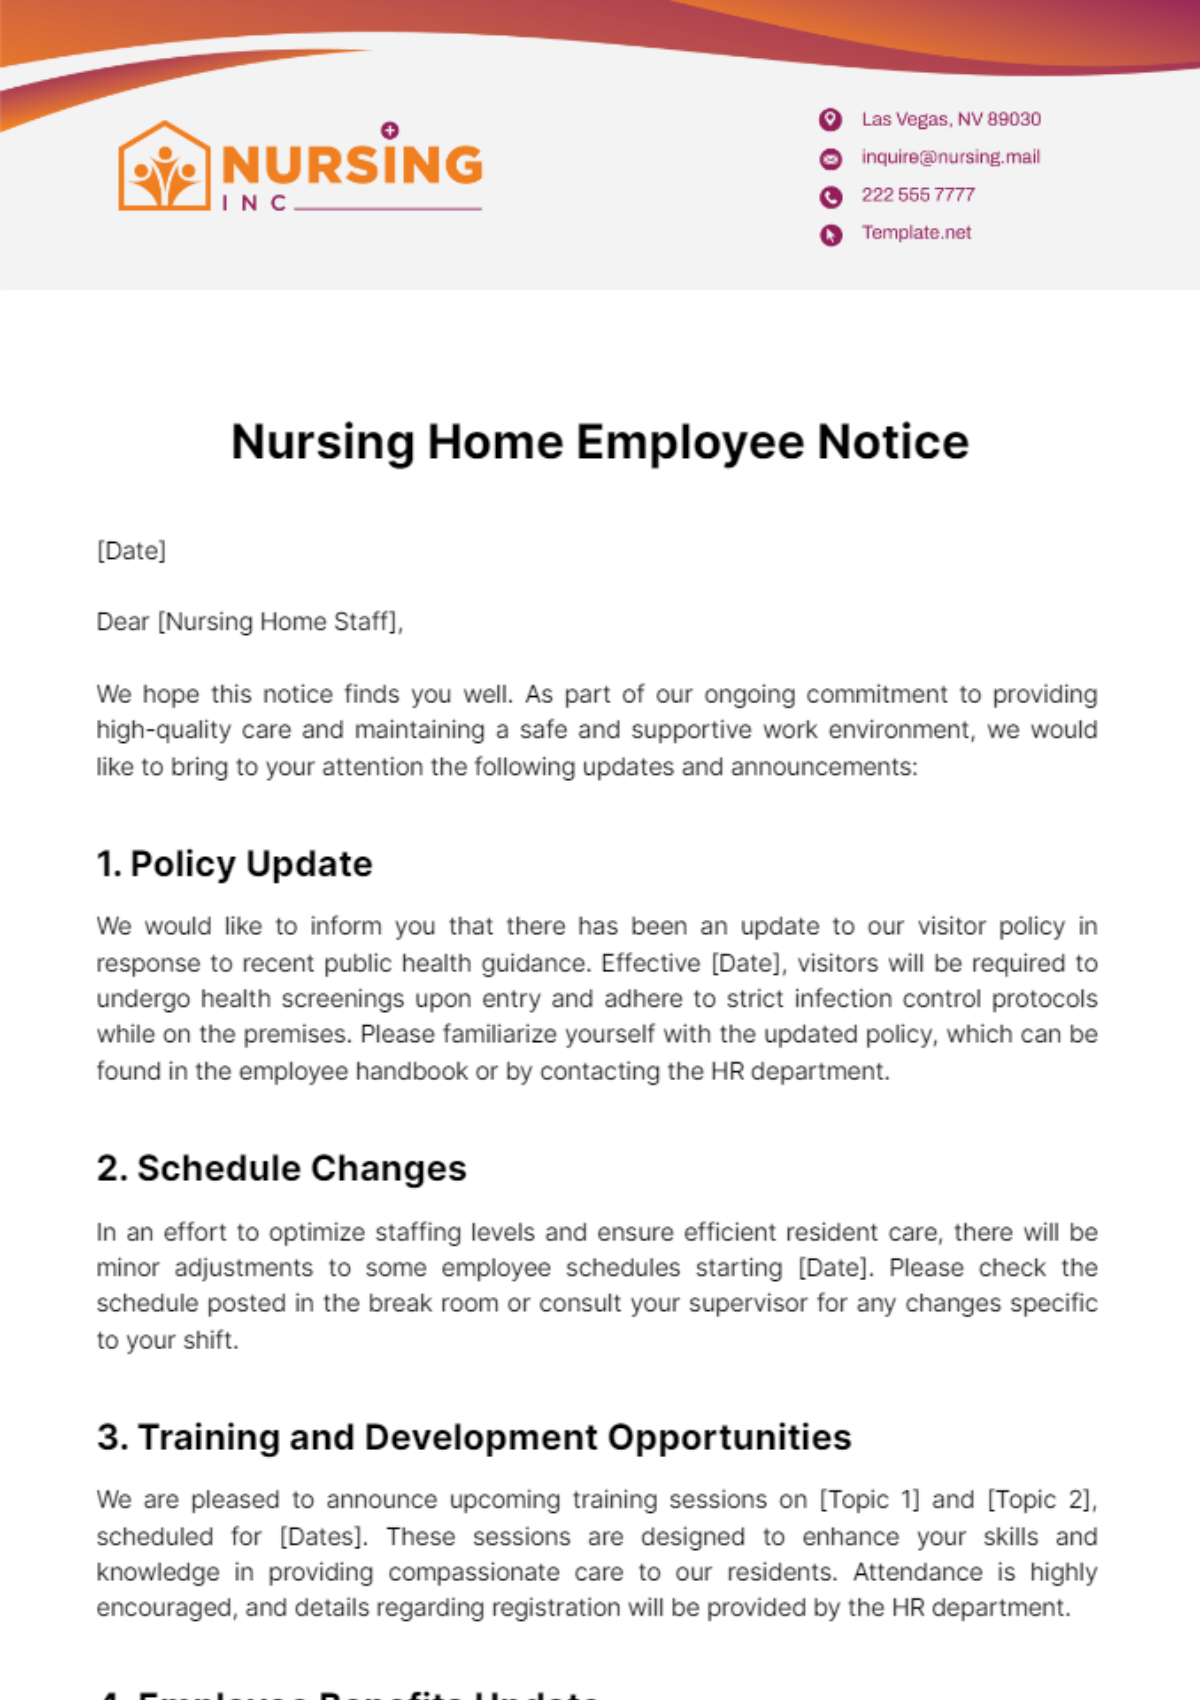 Nursing Home Employee Notice Template